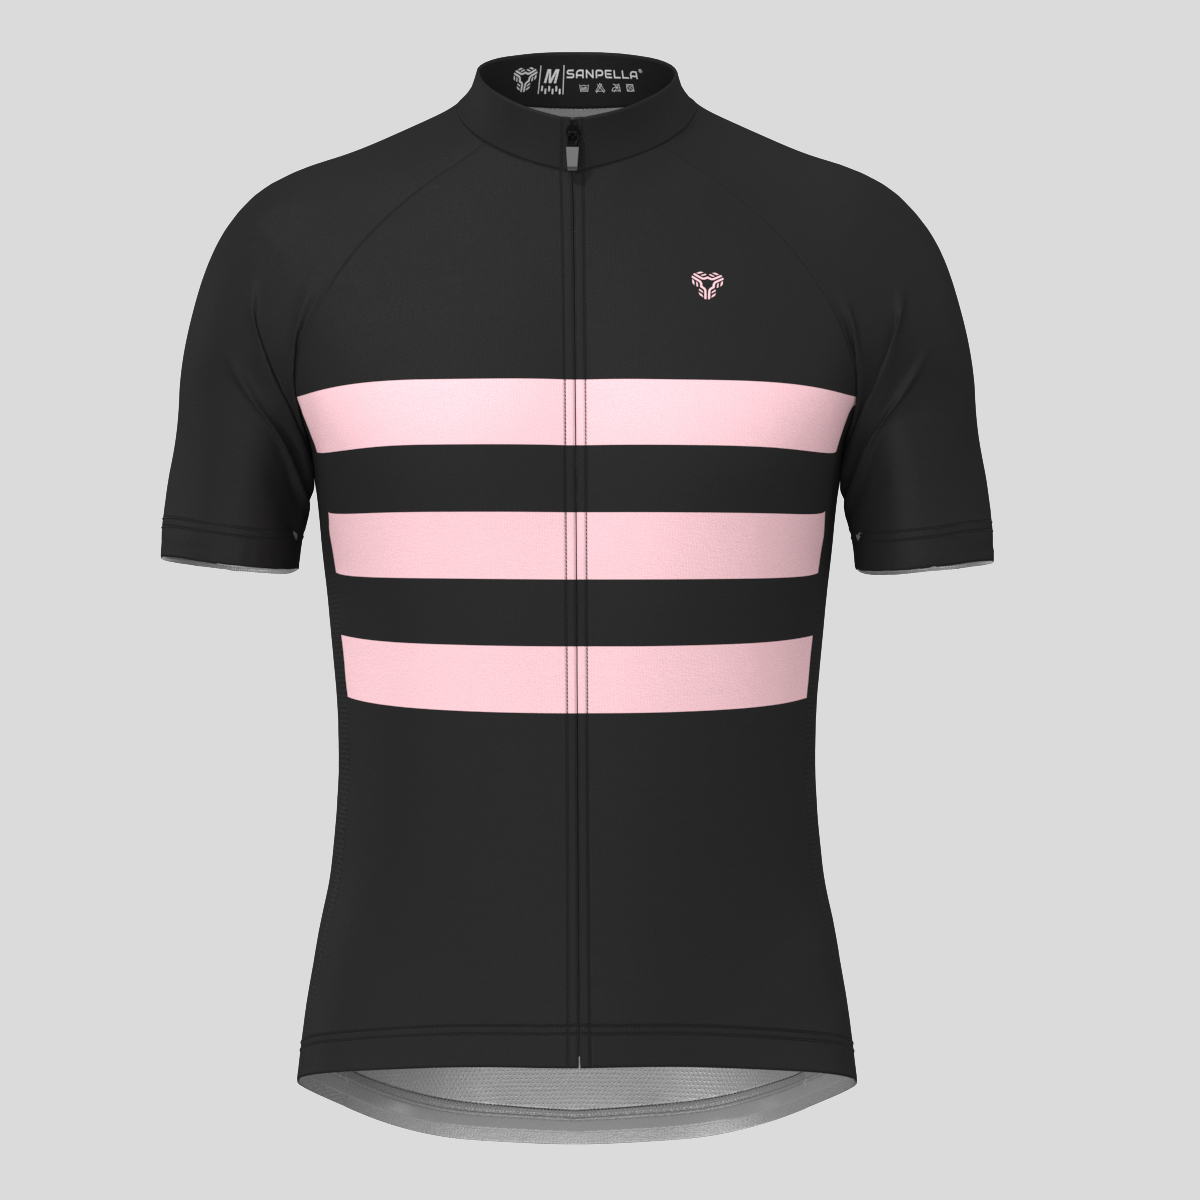 Men's Classic Stripes Cycling Jersey - Black/Pink